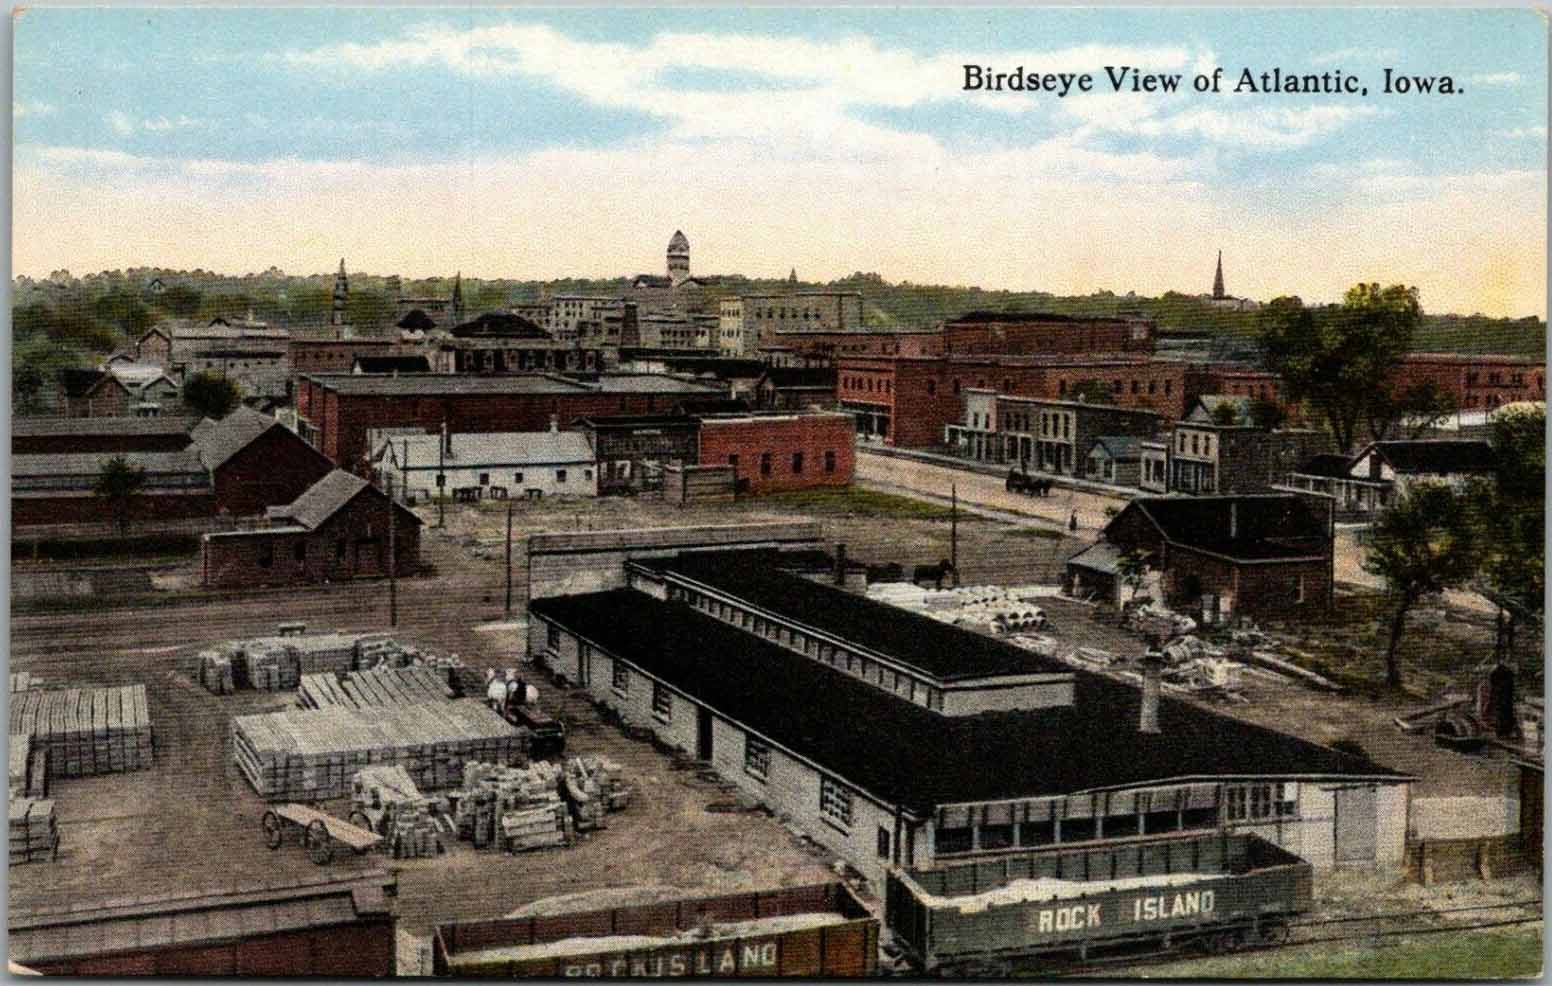 Birdseye View of Railroad Yards, Atlantic, Iowa